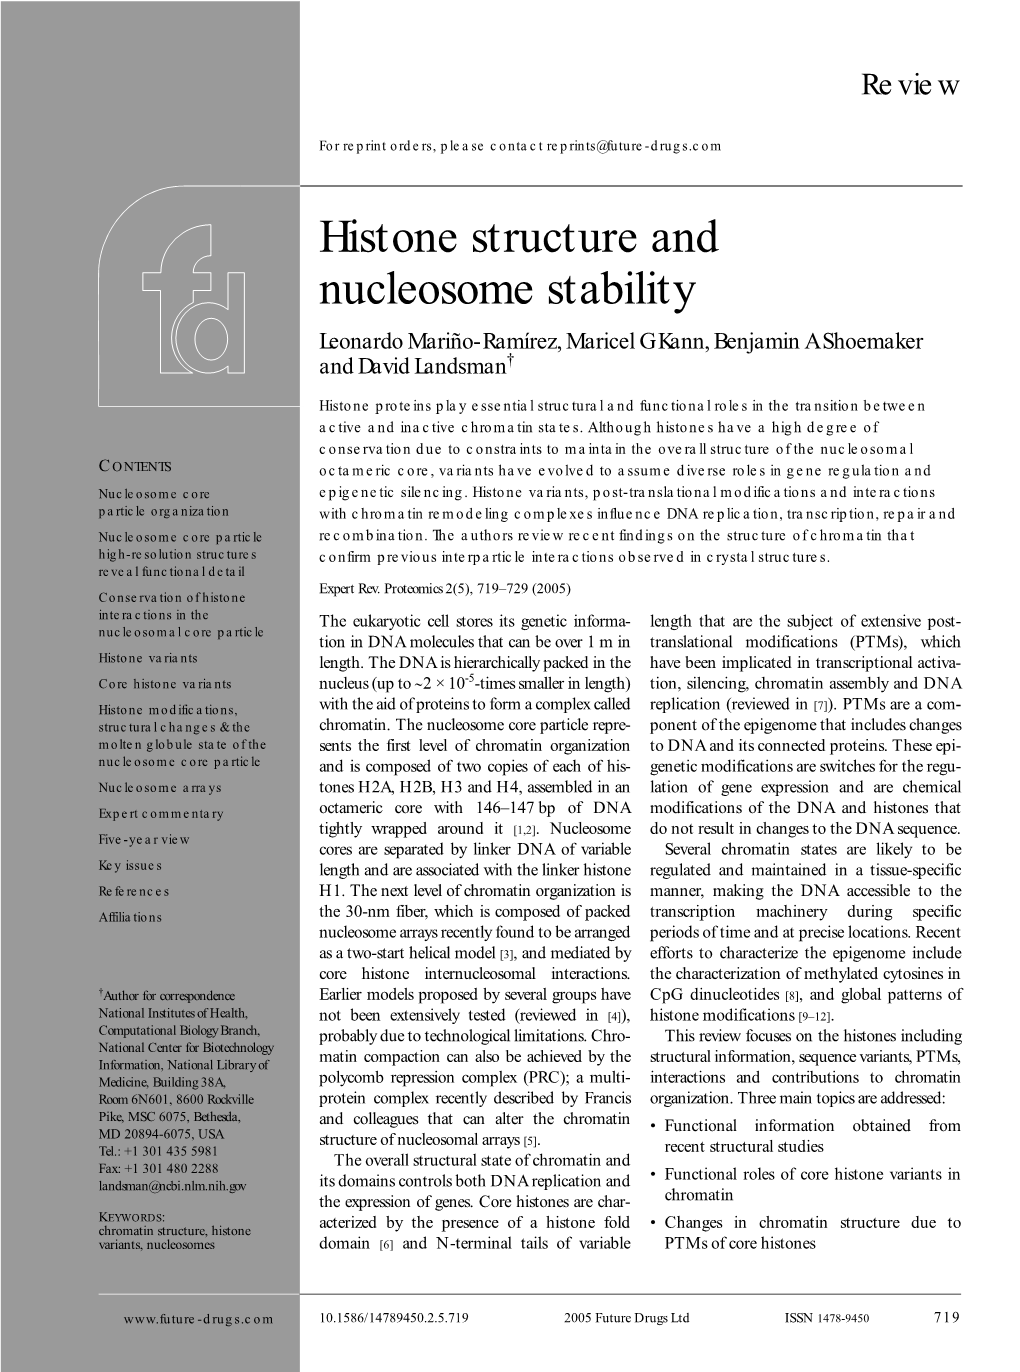 Histone Structure and Nucleosome Stability Leonardo Mariño-Ramírez, Maricel G Kann, Benjamin a Shoemaker and David Landsman†